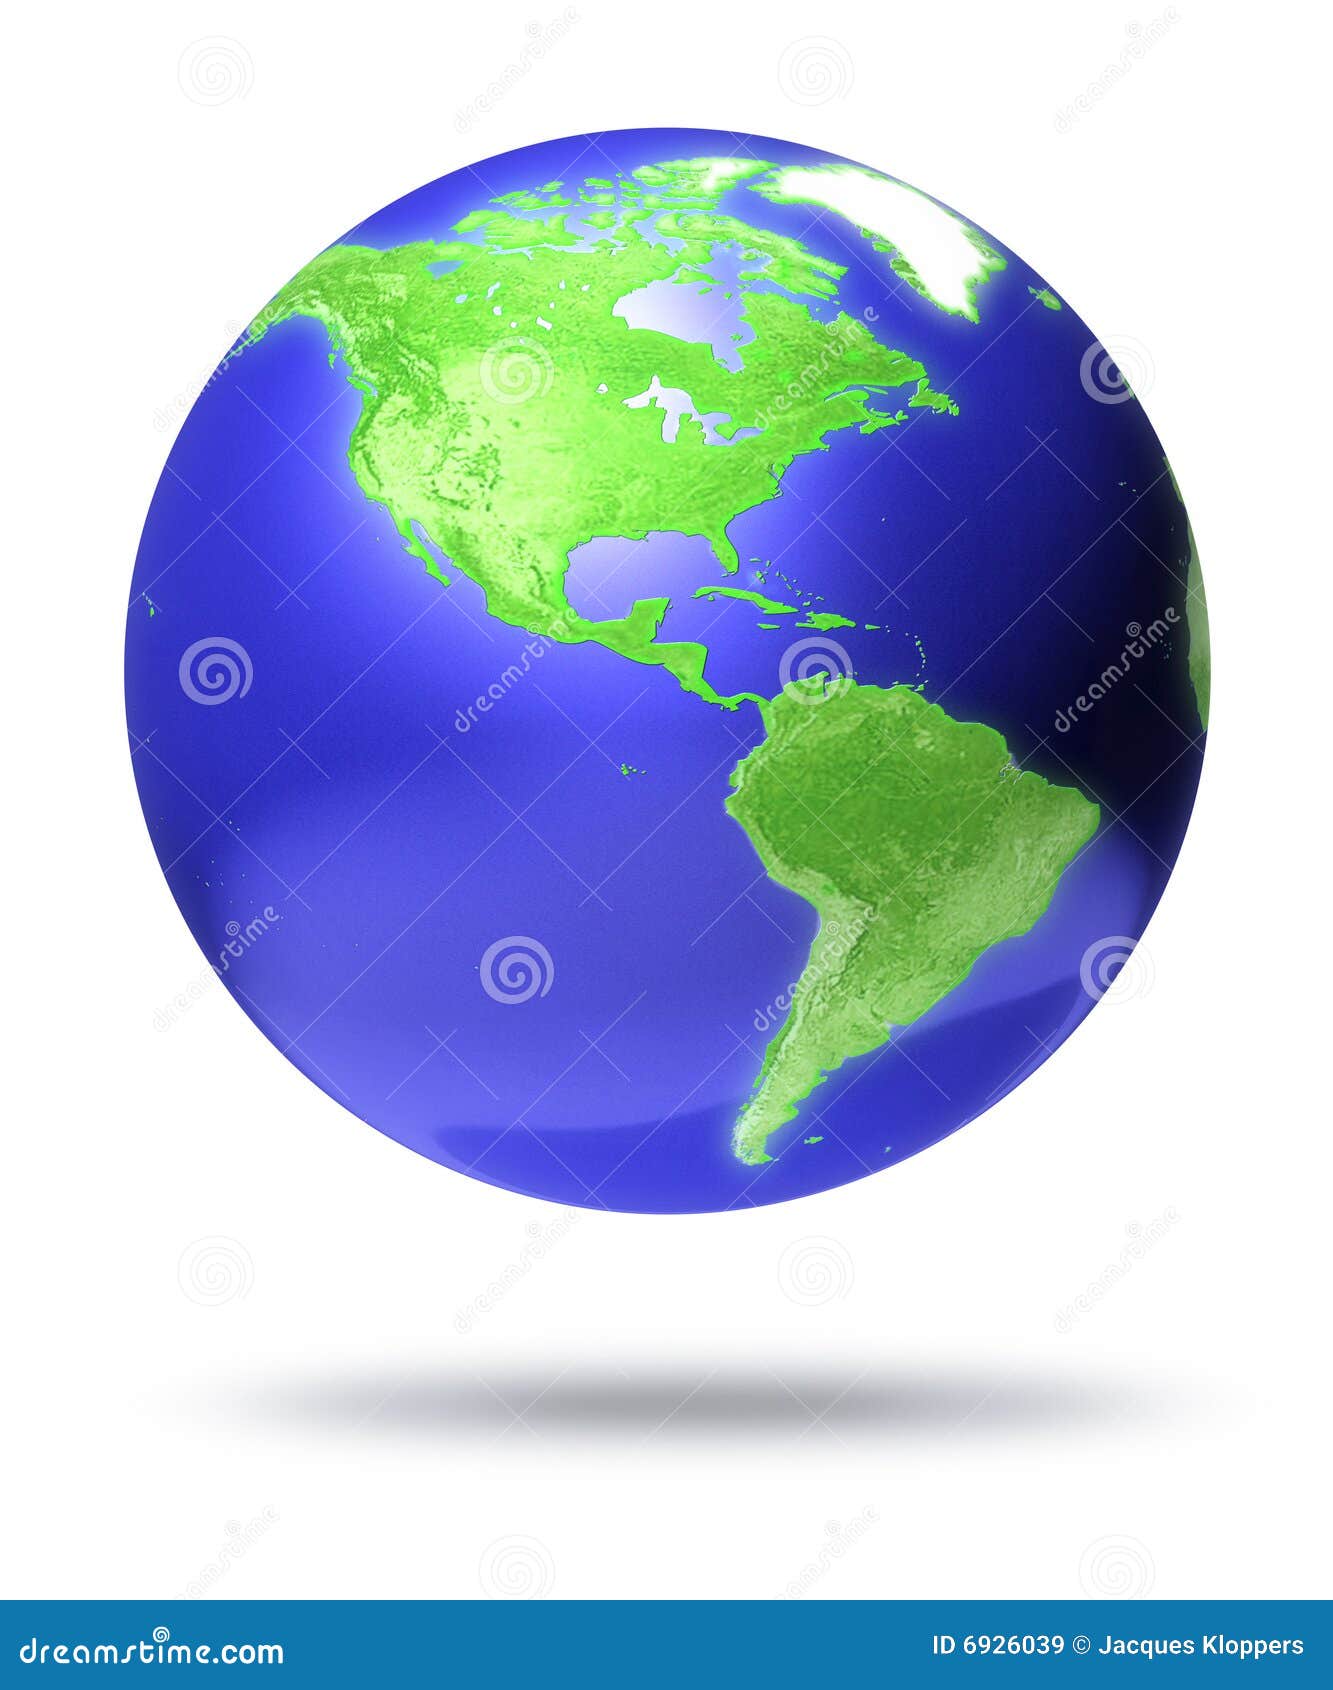 cgi earth globe with america focus